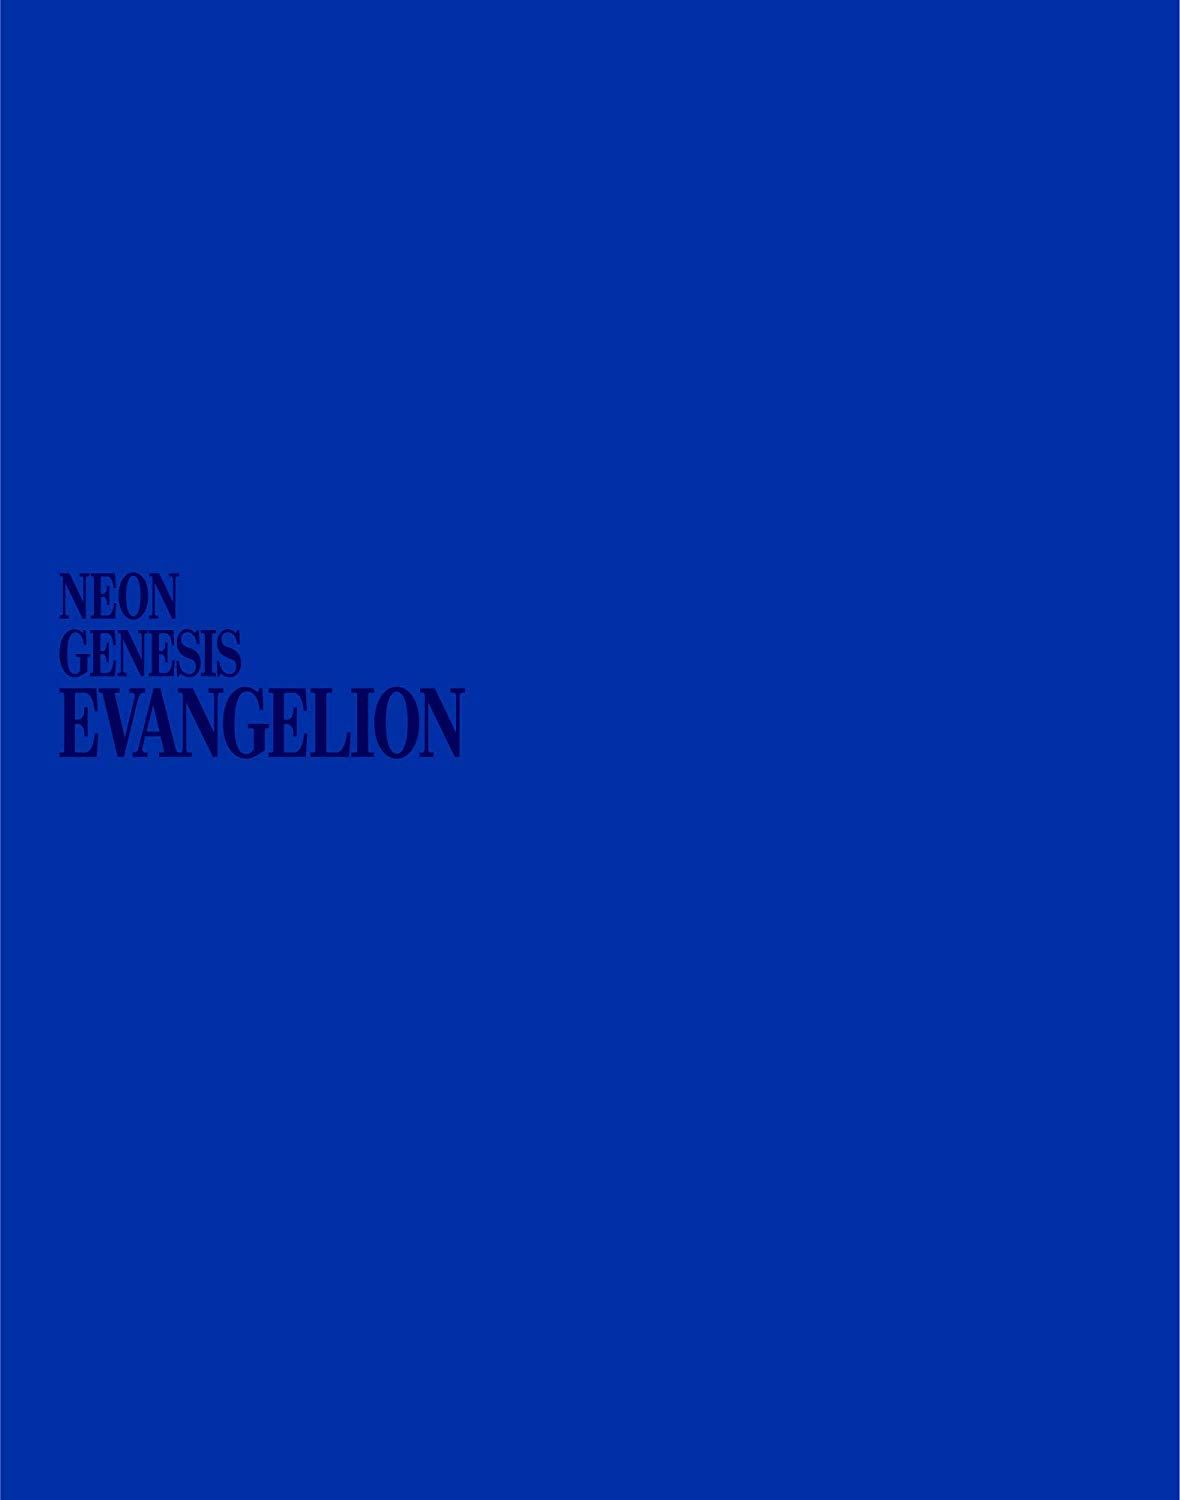 evangelion blu ray box set 2021